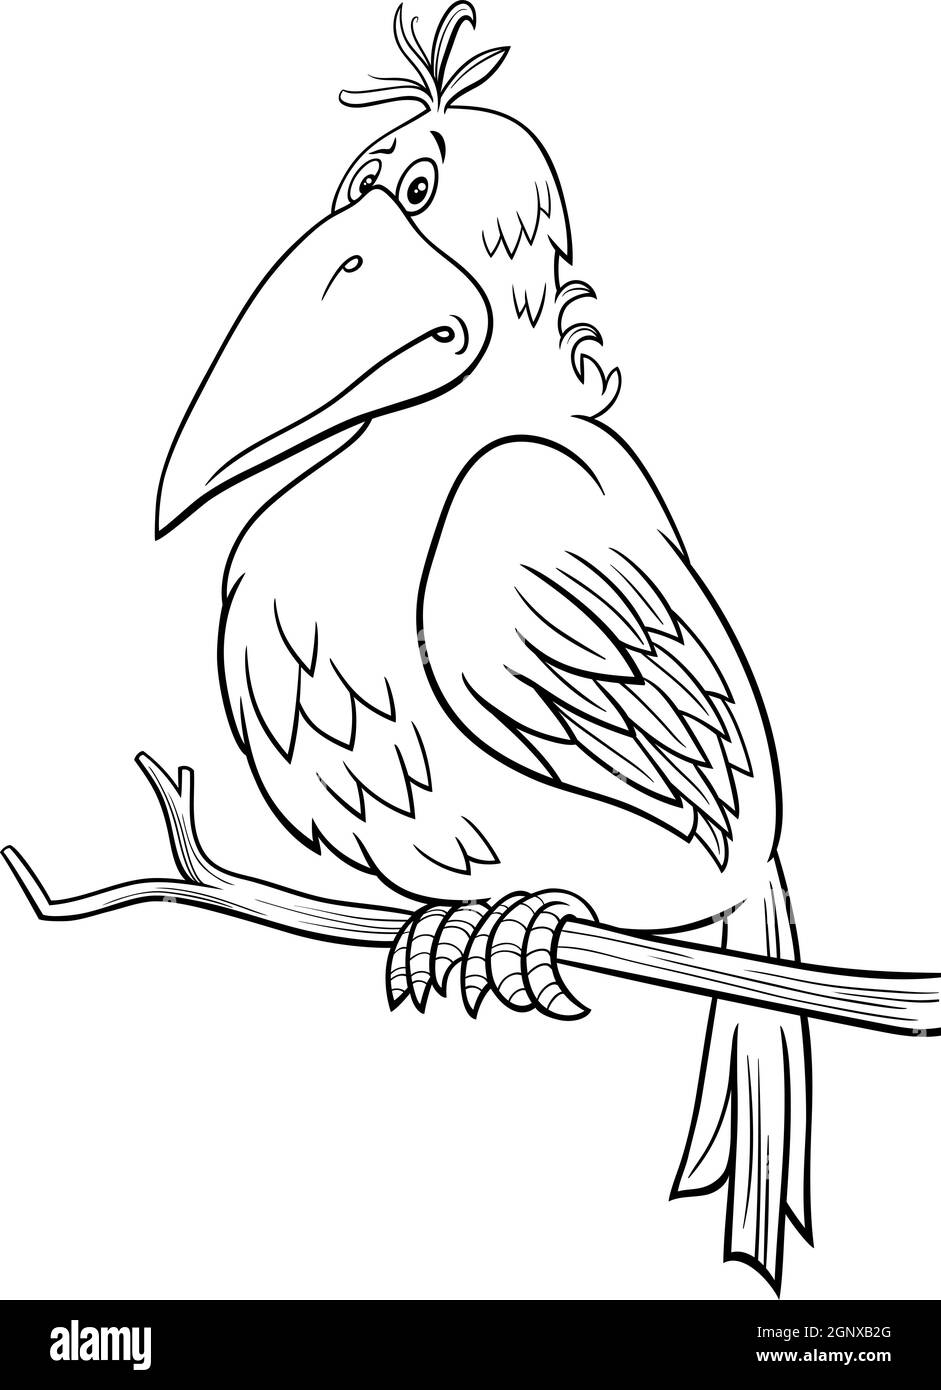 cartoon fantasy bird comic character coloring book page Stock Vector